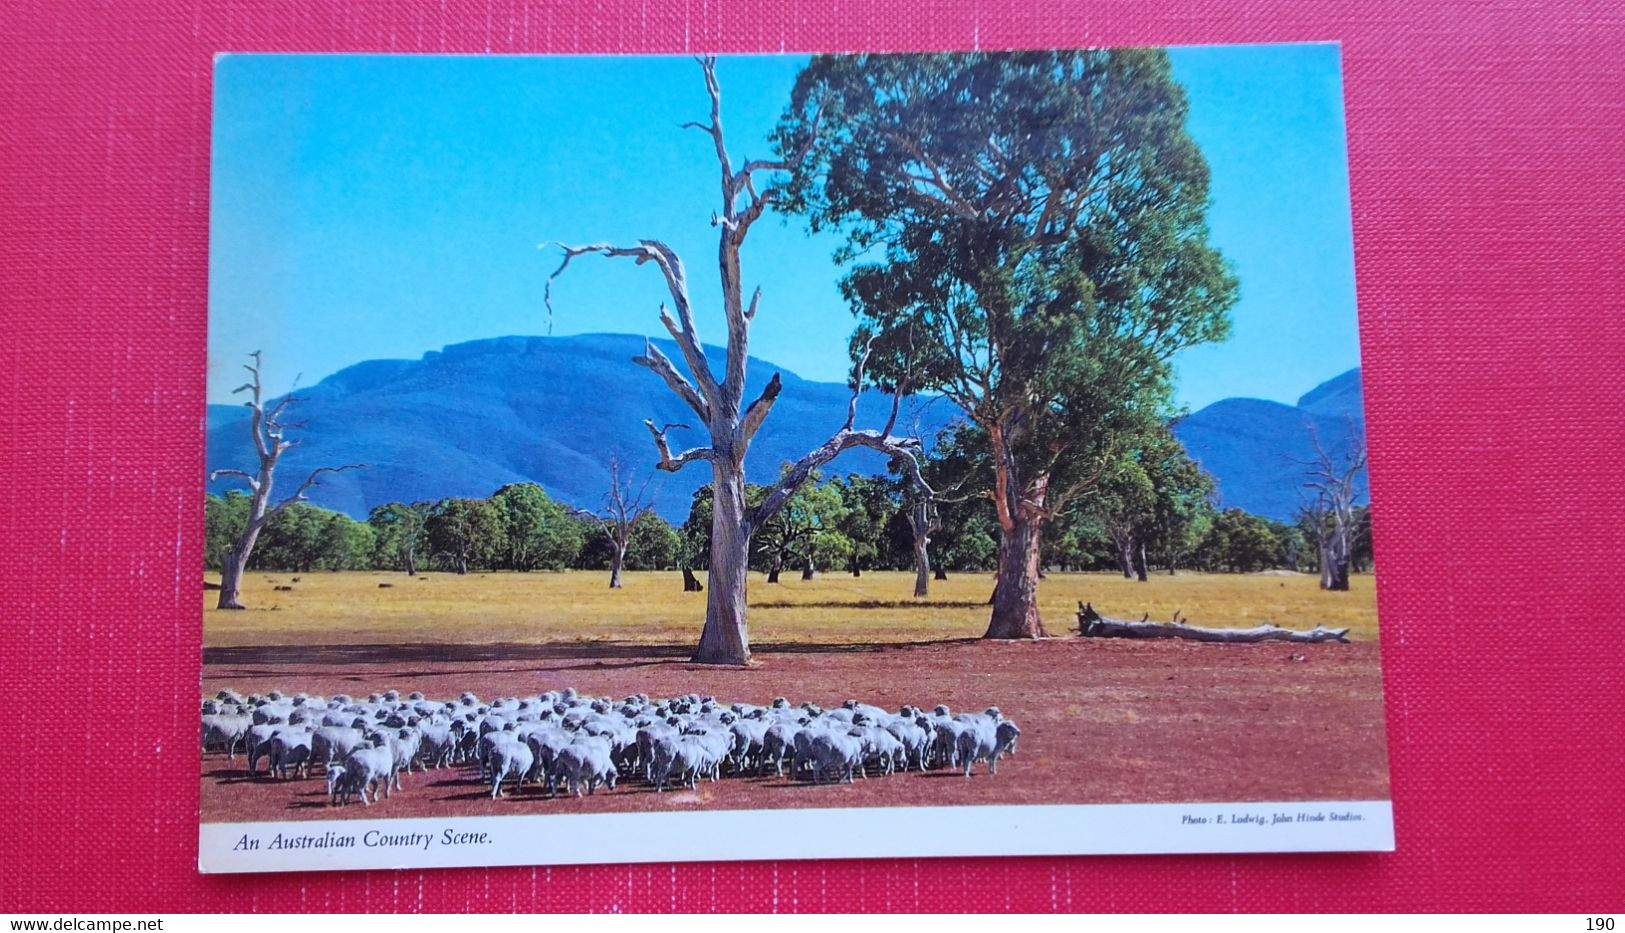 Sheeps.An Australian Country Scene - Outback